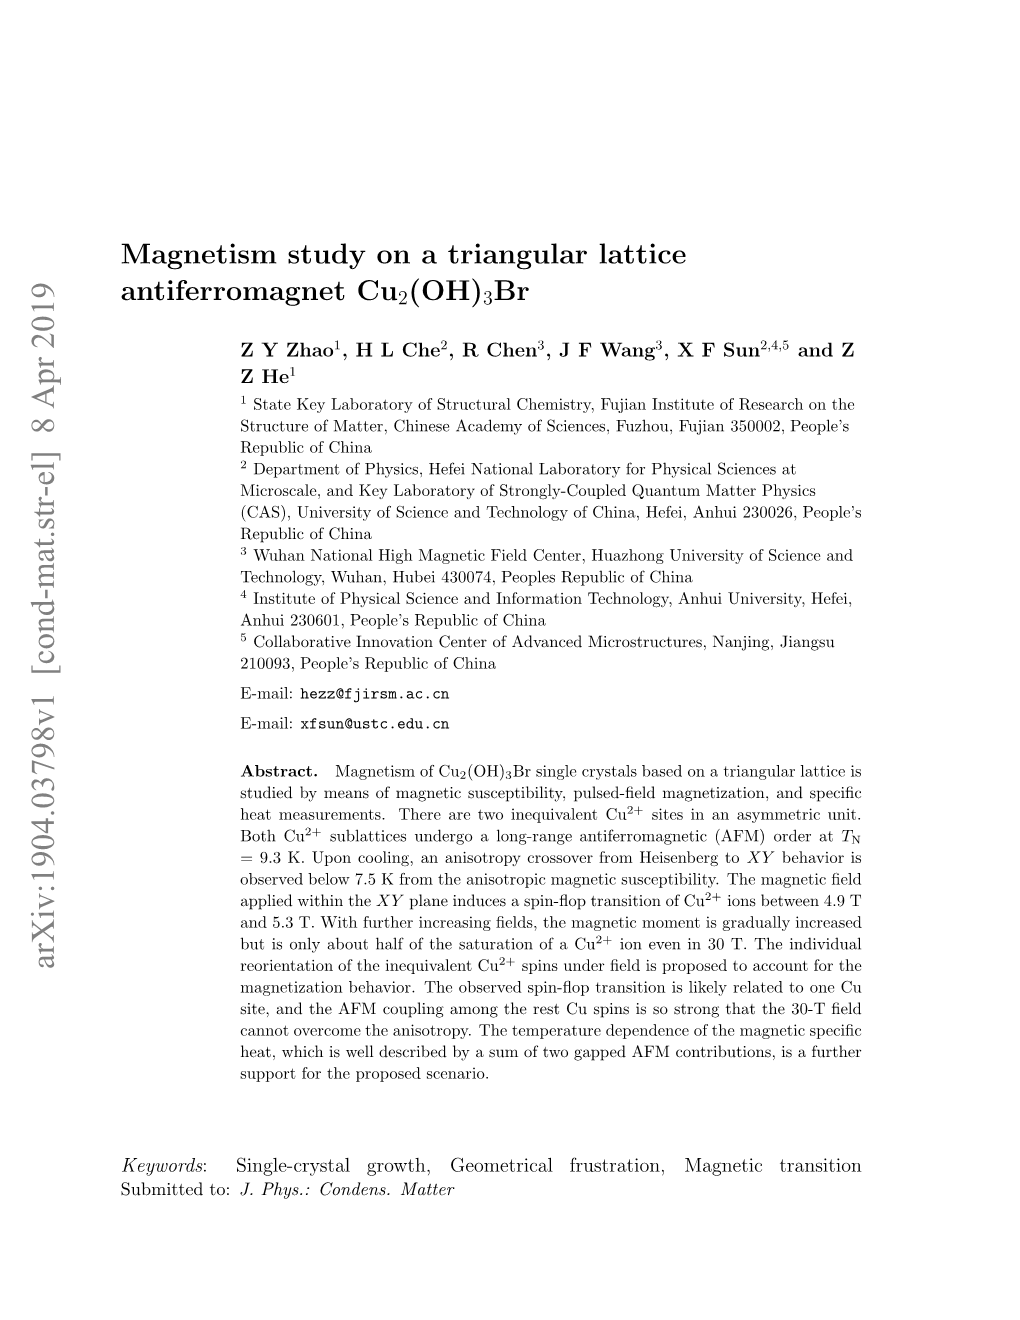 Magnetism Study on a Triangular Lattice Antiferromagnet Cu2(OH)3Br 2